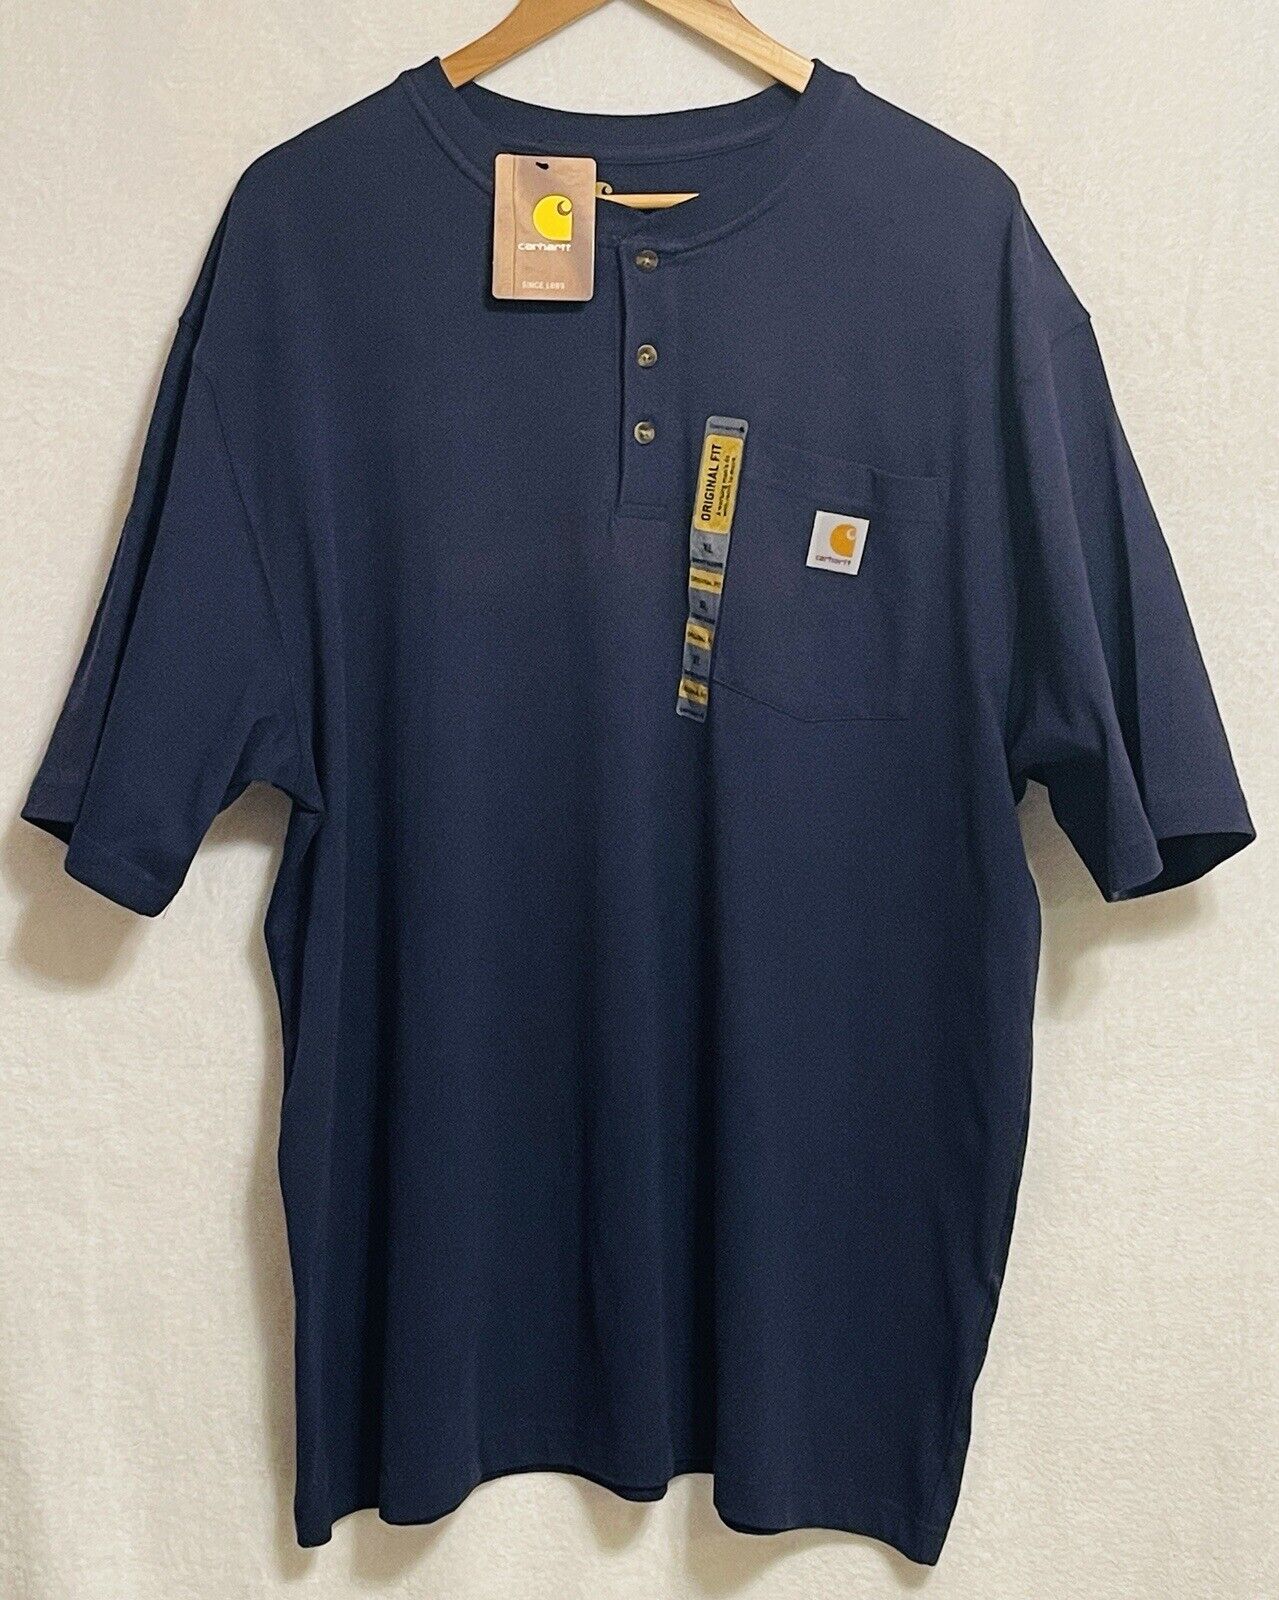 Carhartt NWT Mens Tshirt Size XL Short Sleeve K84 Pocket Button Up Navy Blue